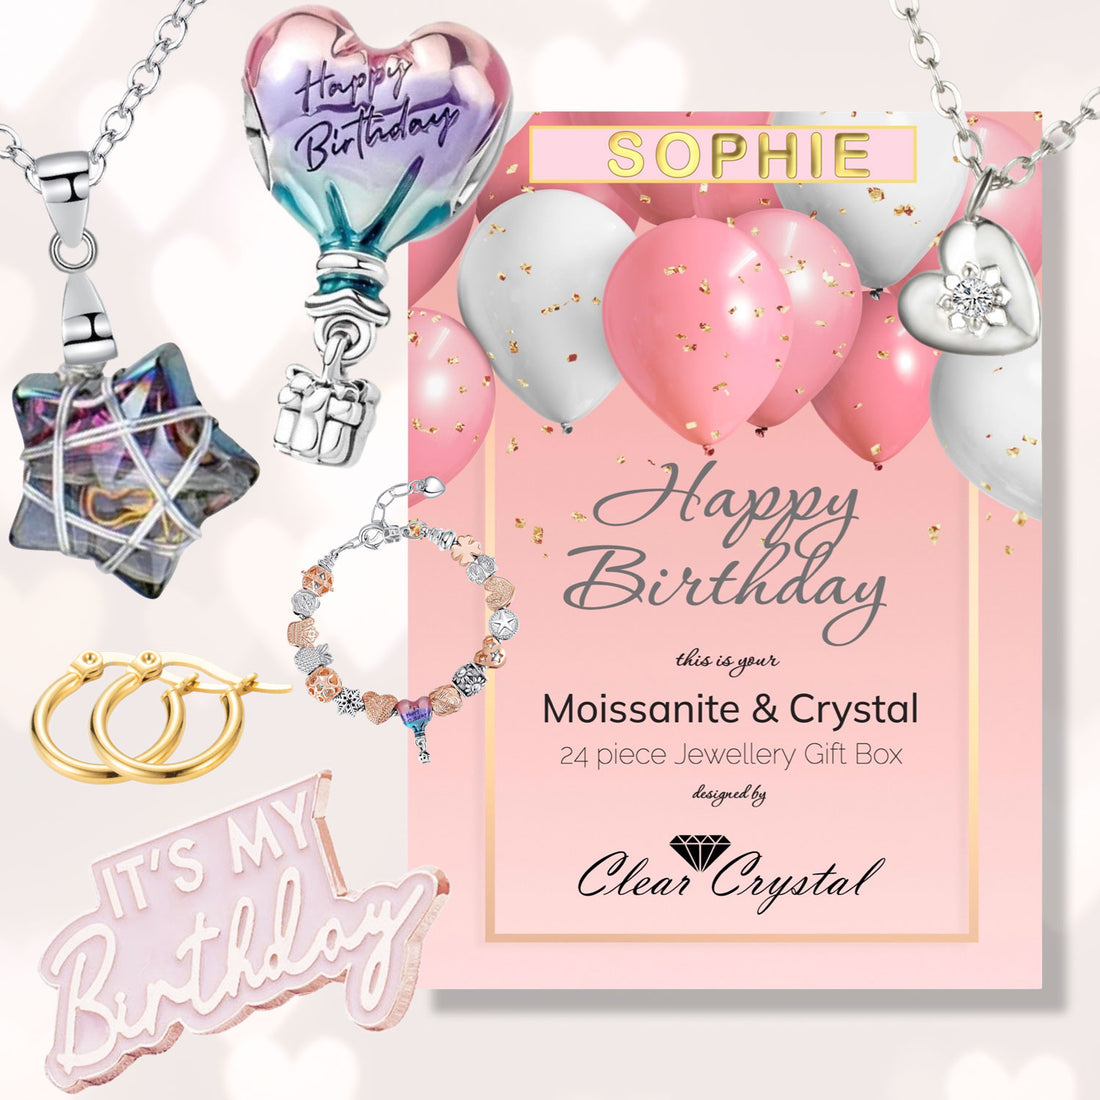 Moissanite & Crystal 24 piece Jewellery Box Set